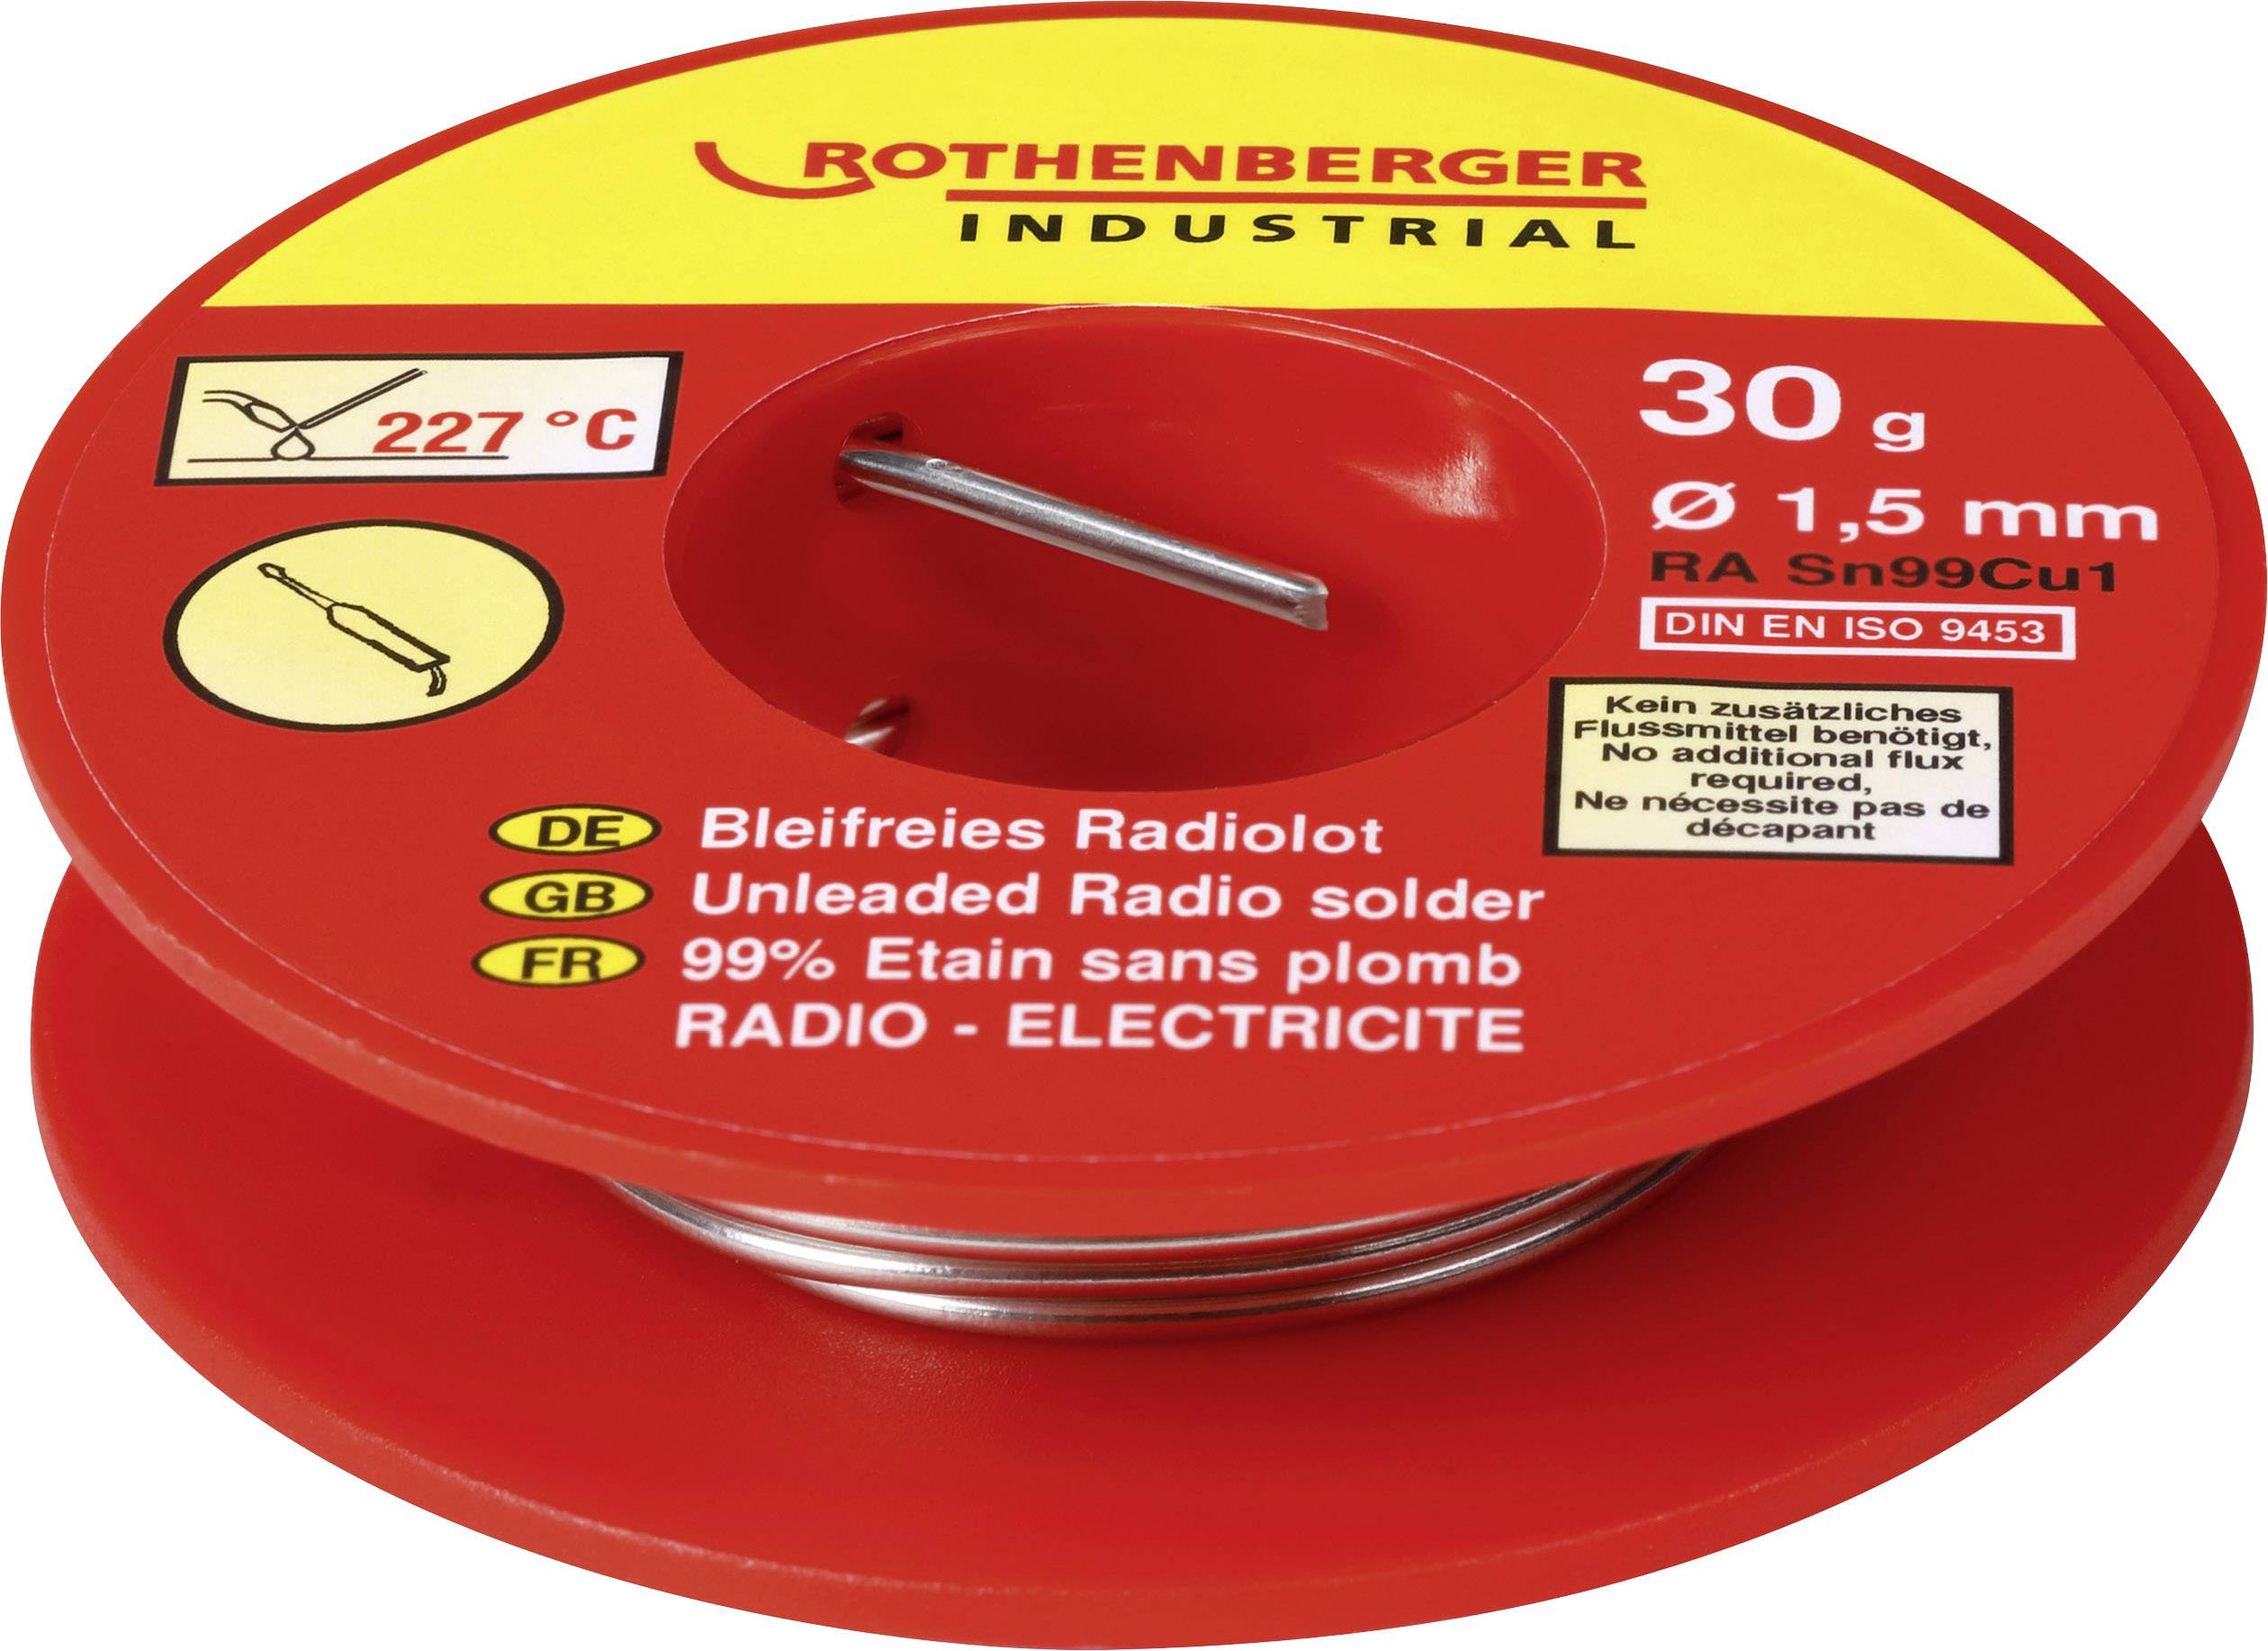 ROTHENBERGER Industrial Bleifreies Radiolot 30g Lötzinn, bleifrei